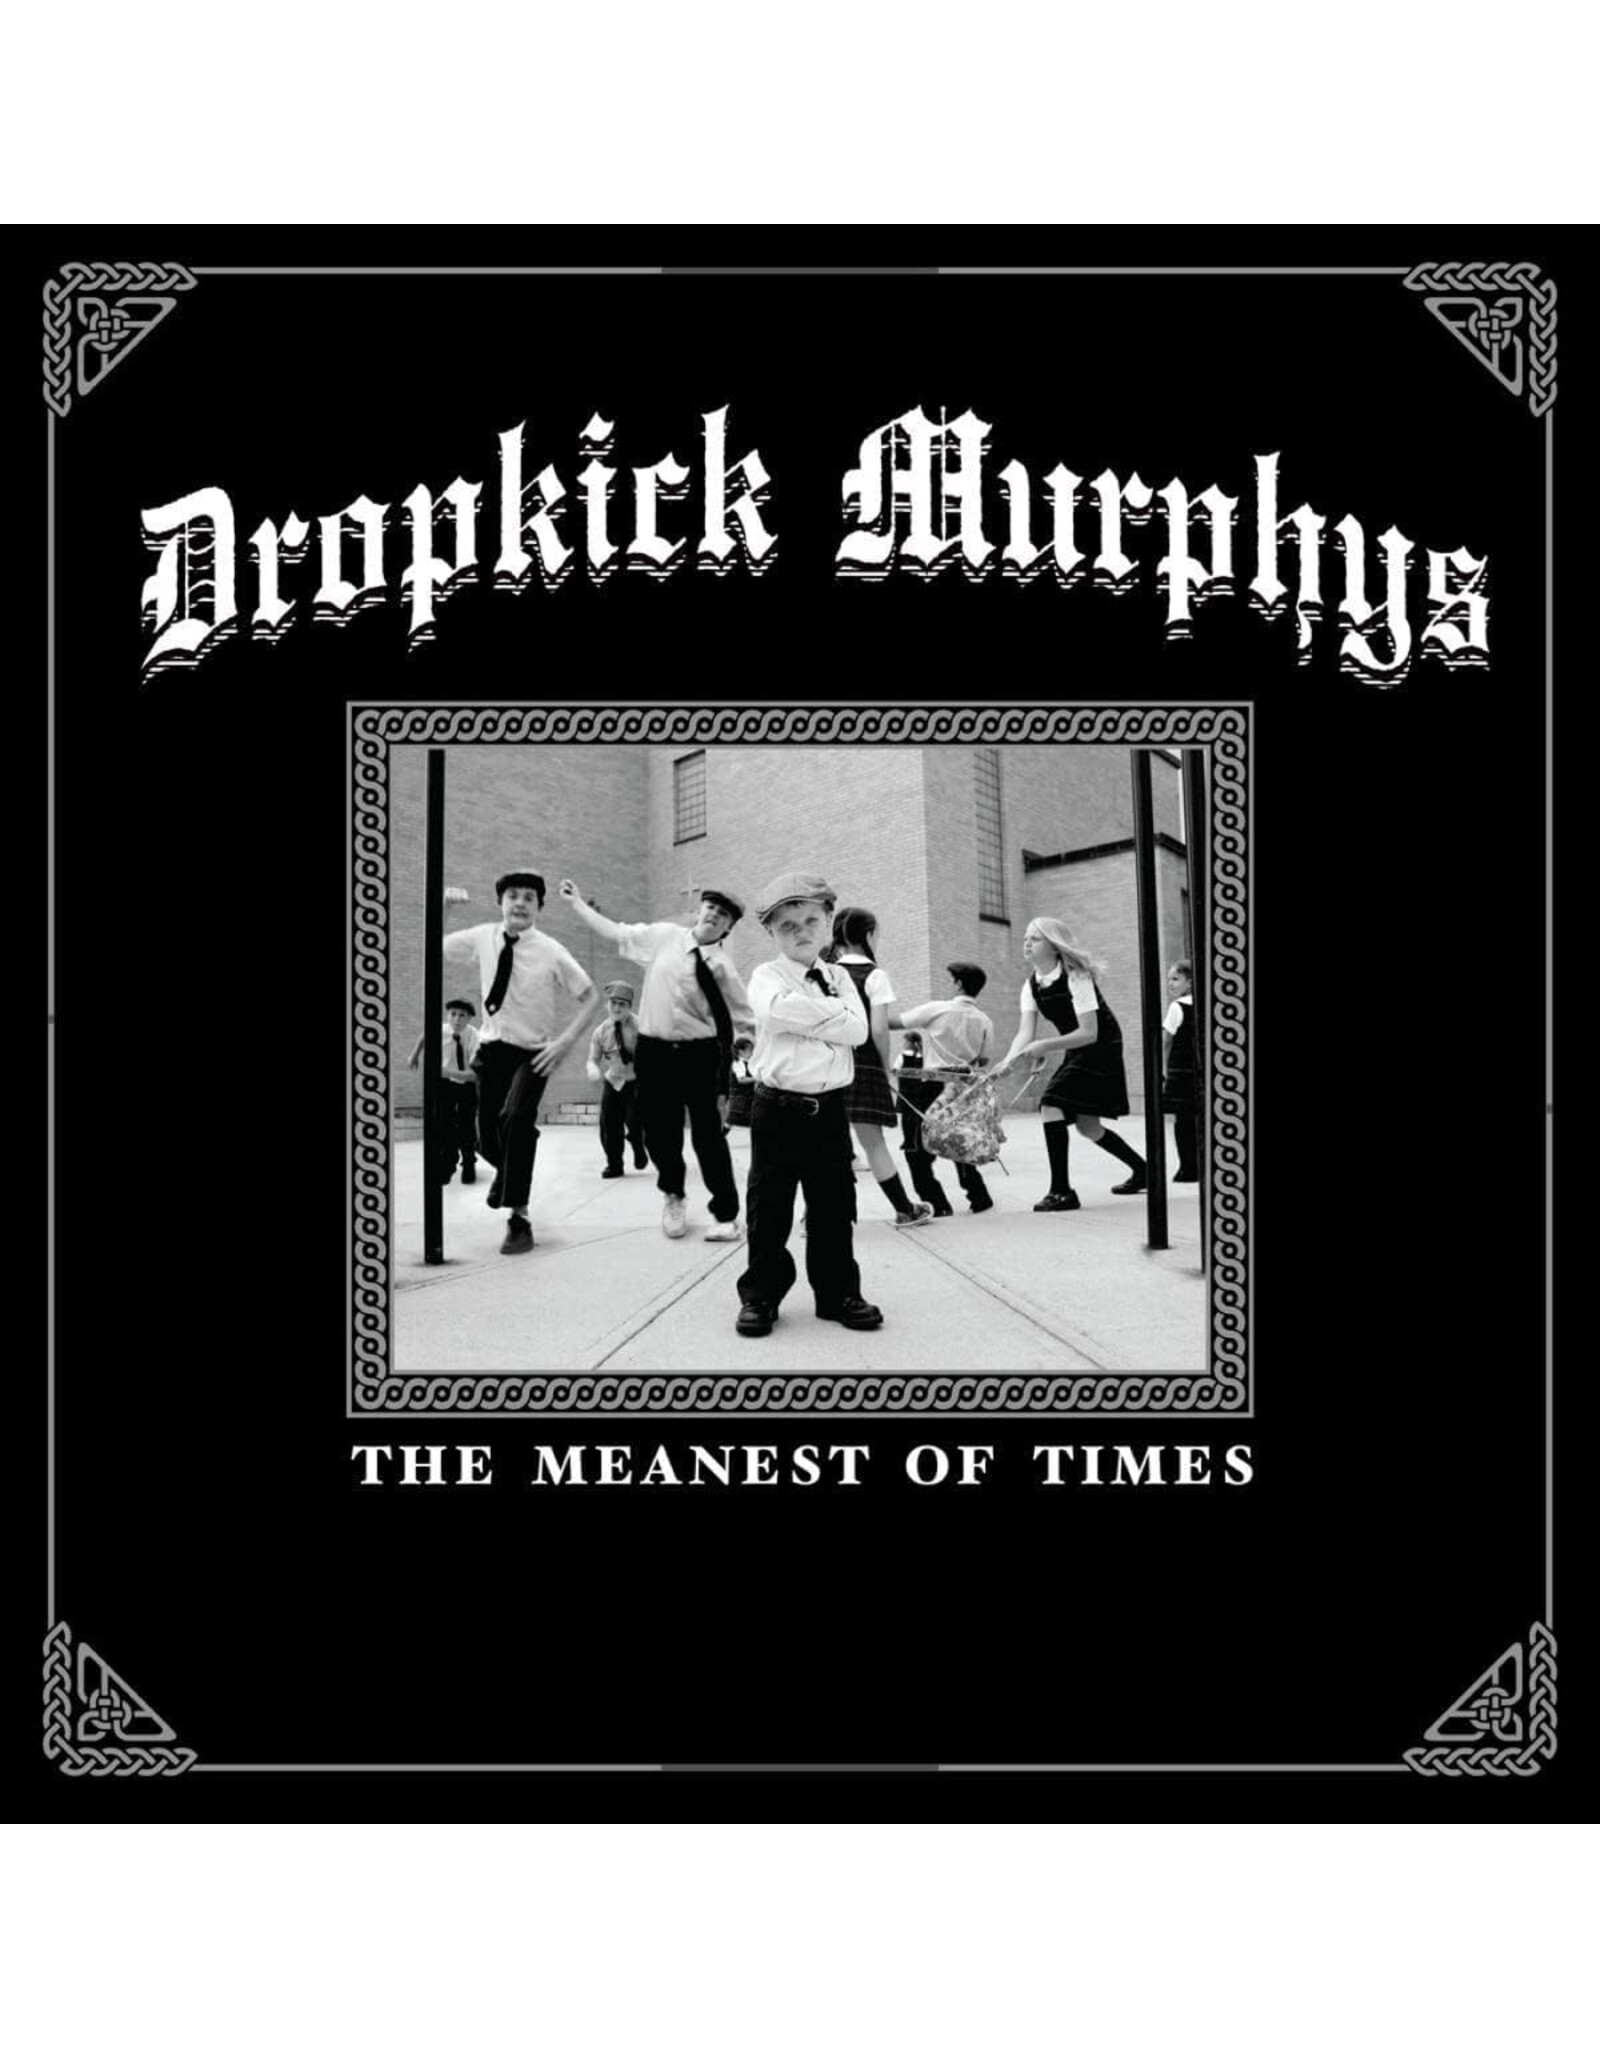 Dropkick Murphys - The Meanest of Times (Clear Green Vinyl)